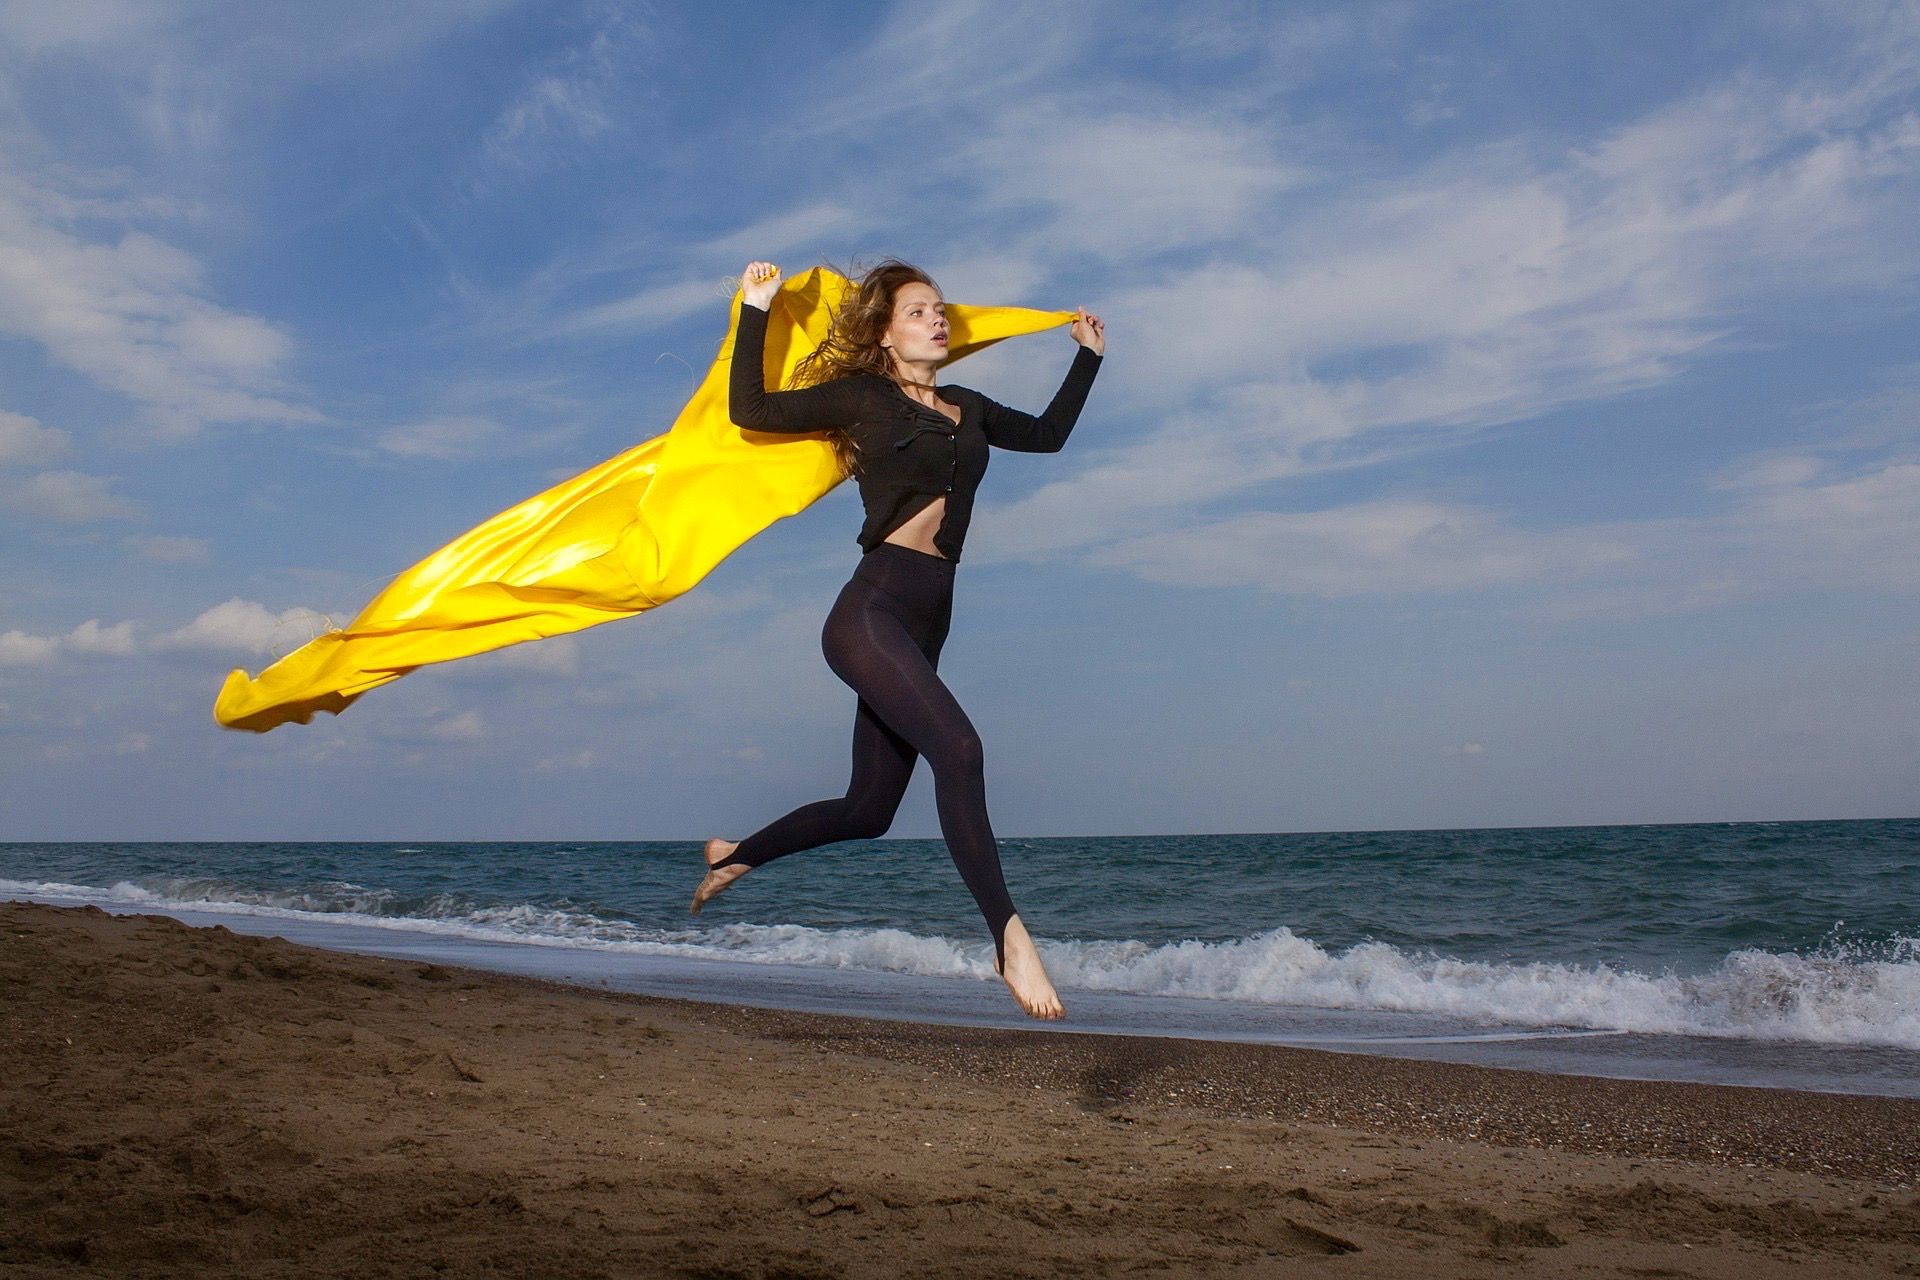 model-yellow-flag-jumping-ocean-freedomain.jpg